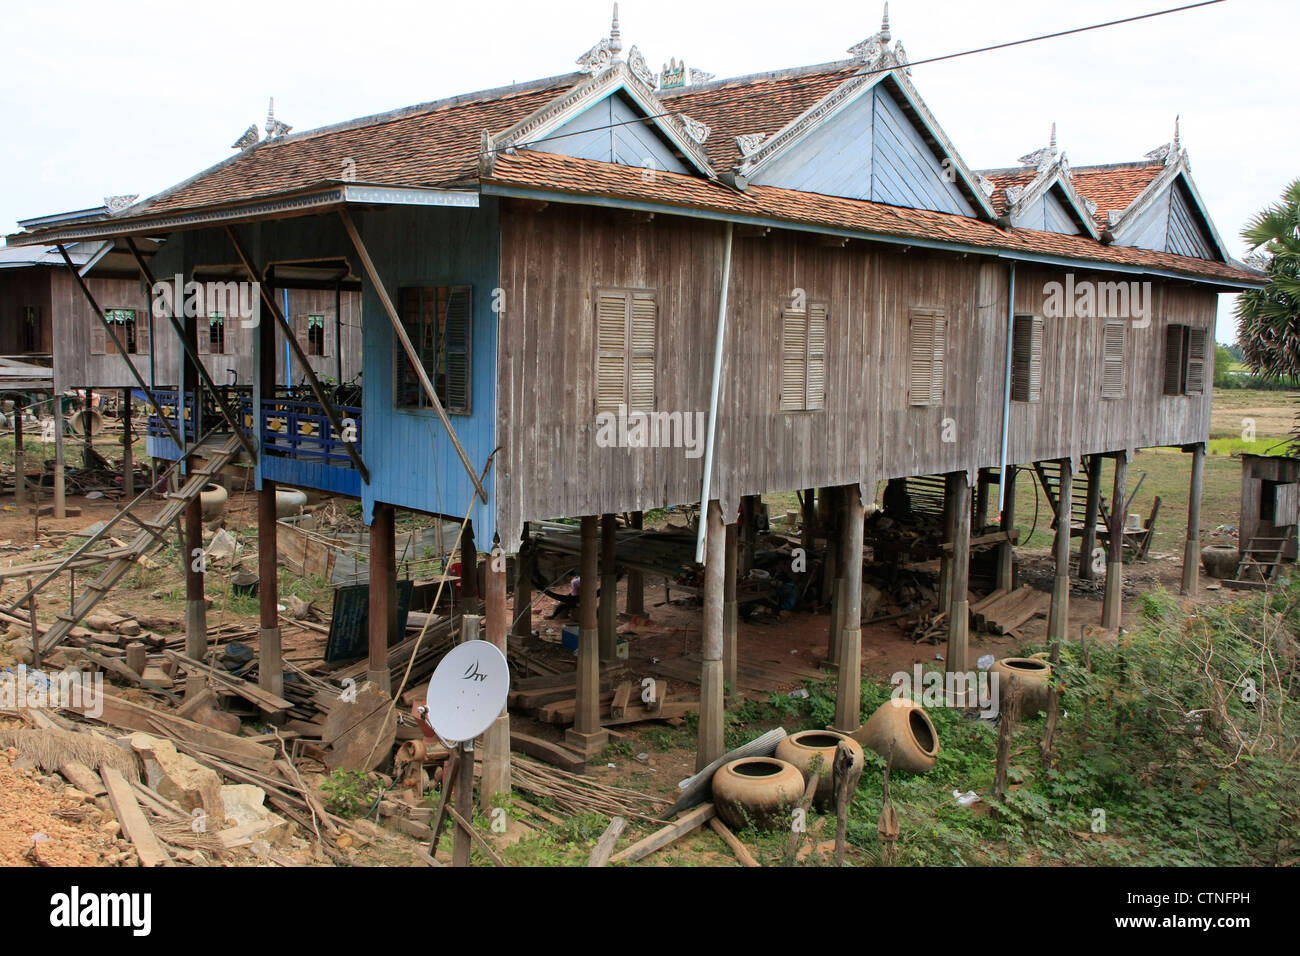 Stilt houses in a small village, Cambodia Stock Photo